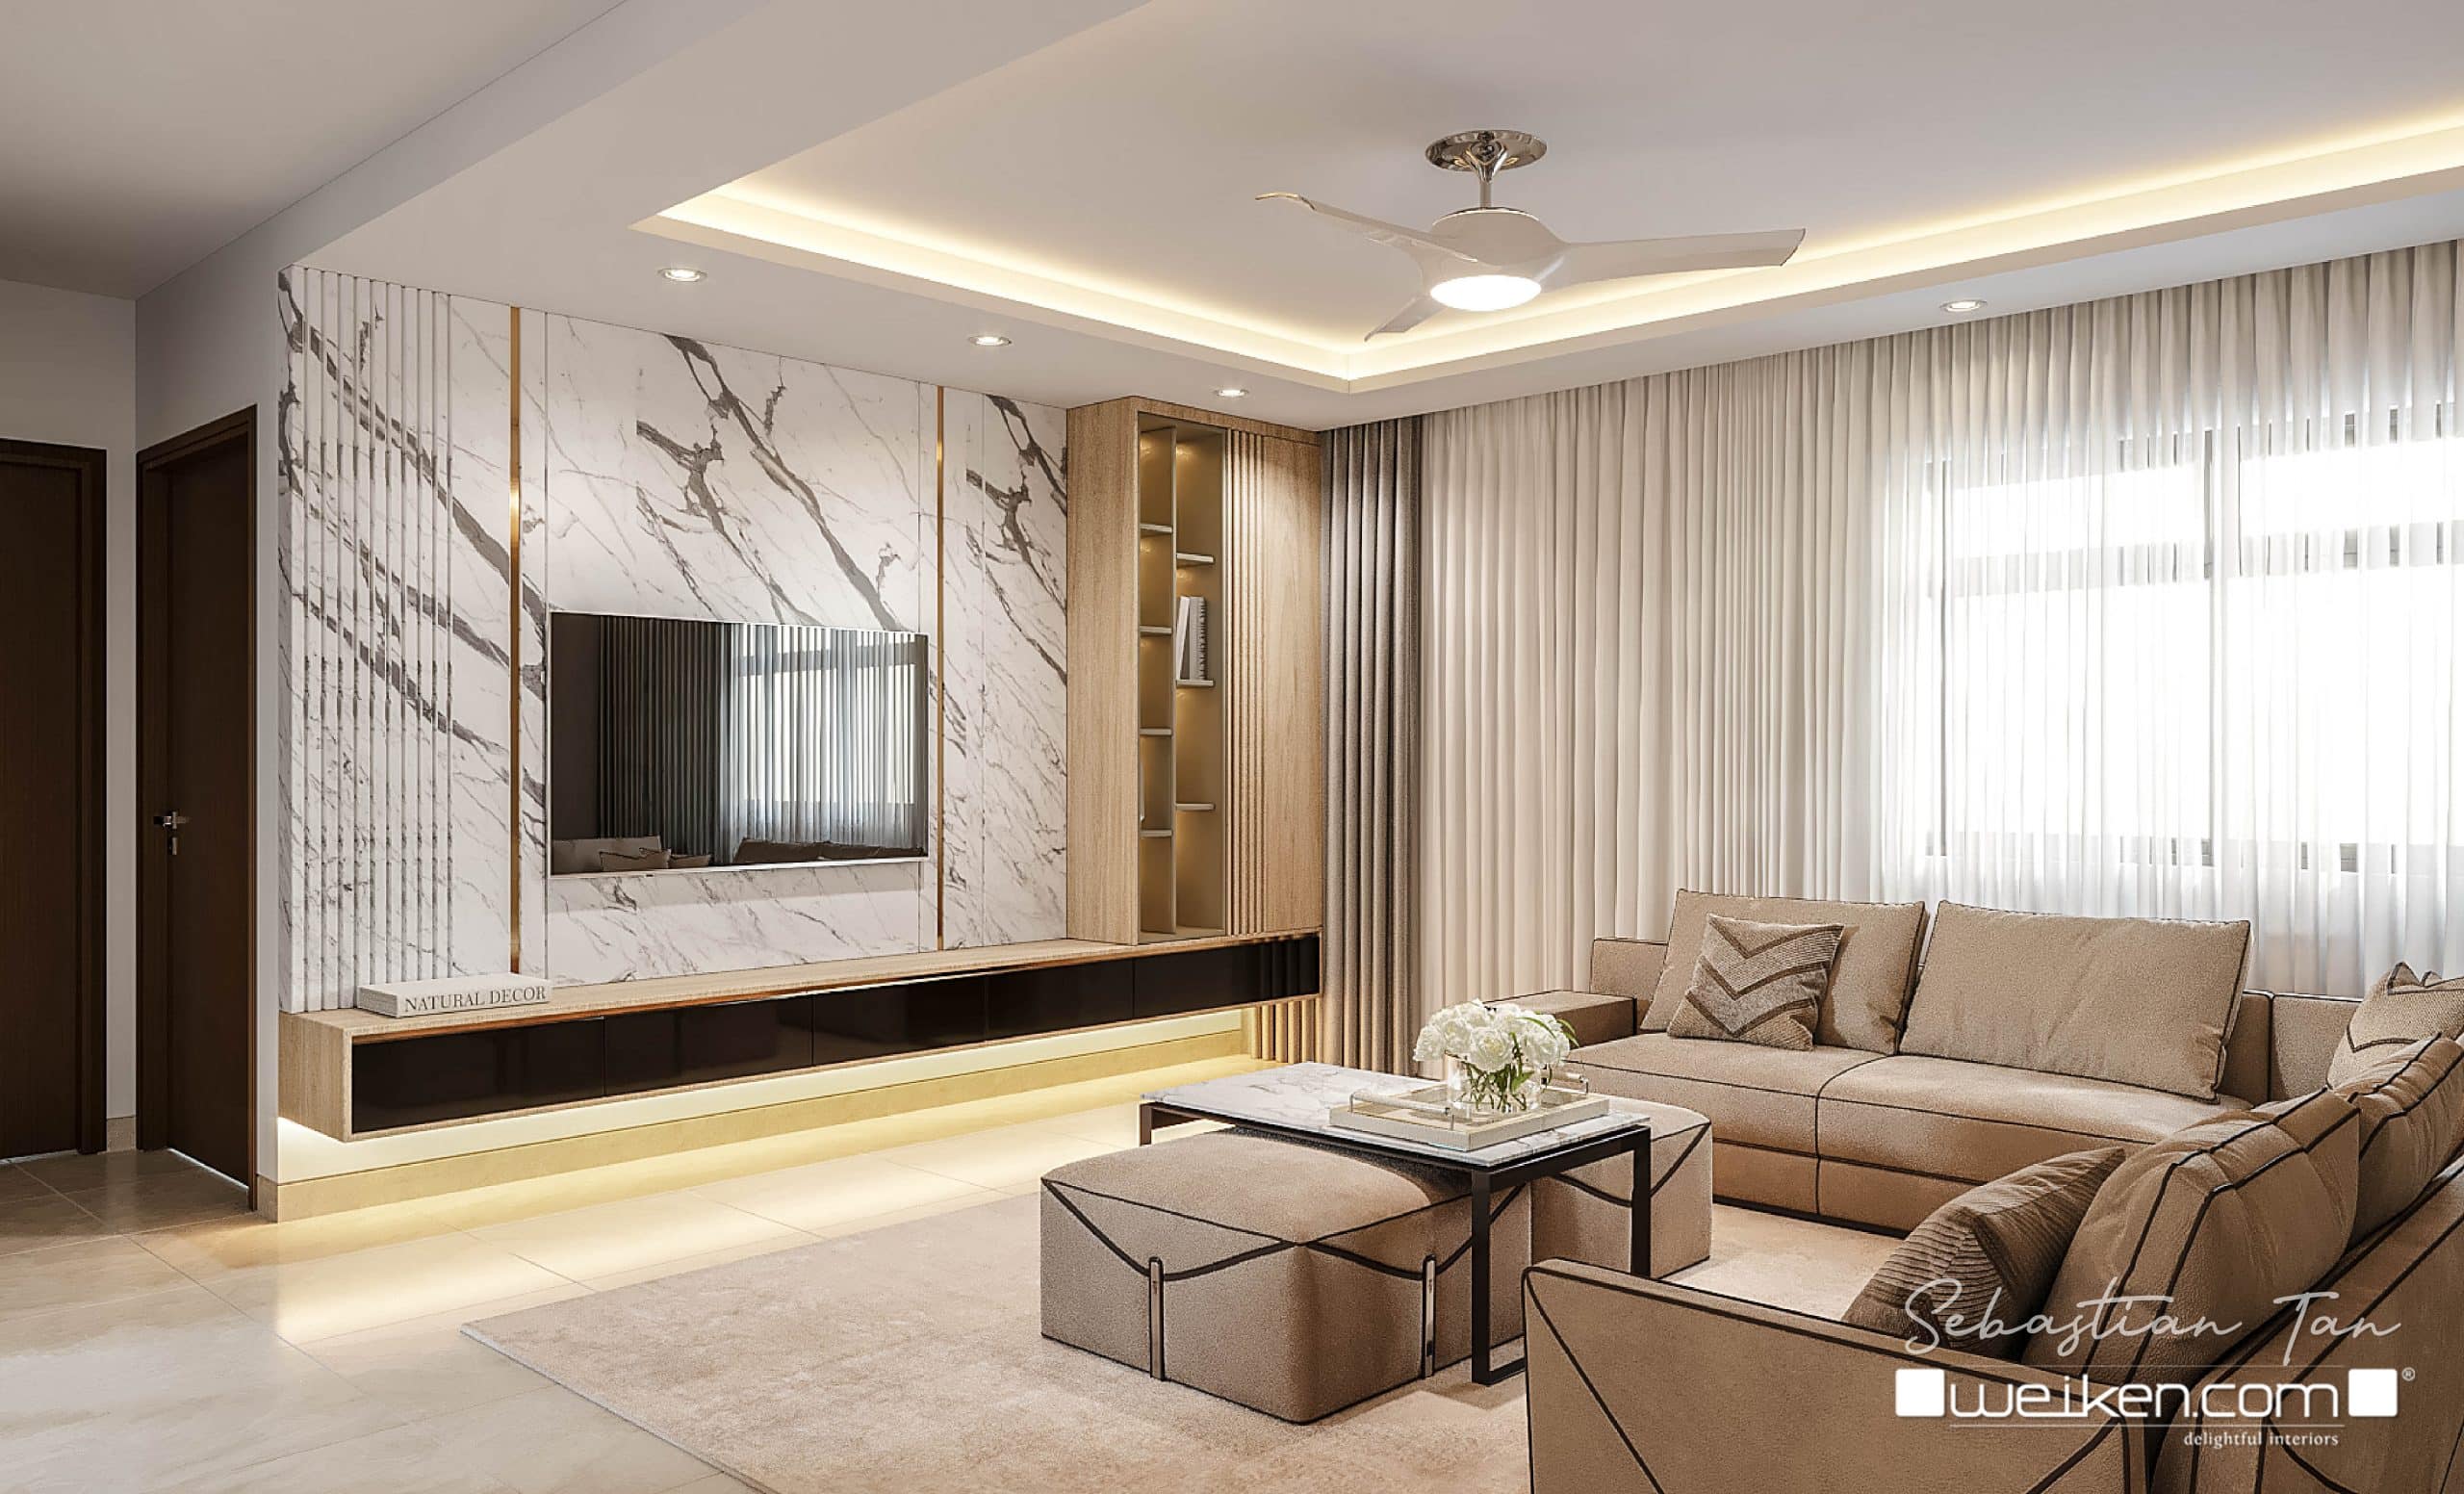 10 tv unit design ideas for the living room - weiken interior design